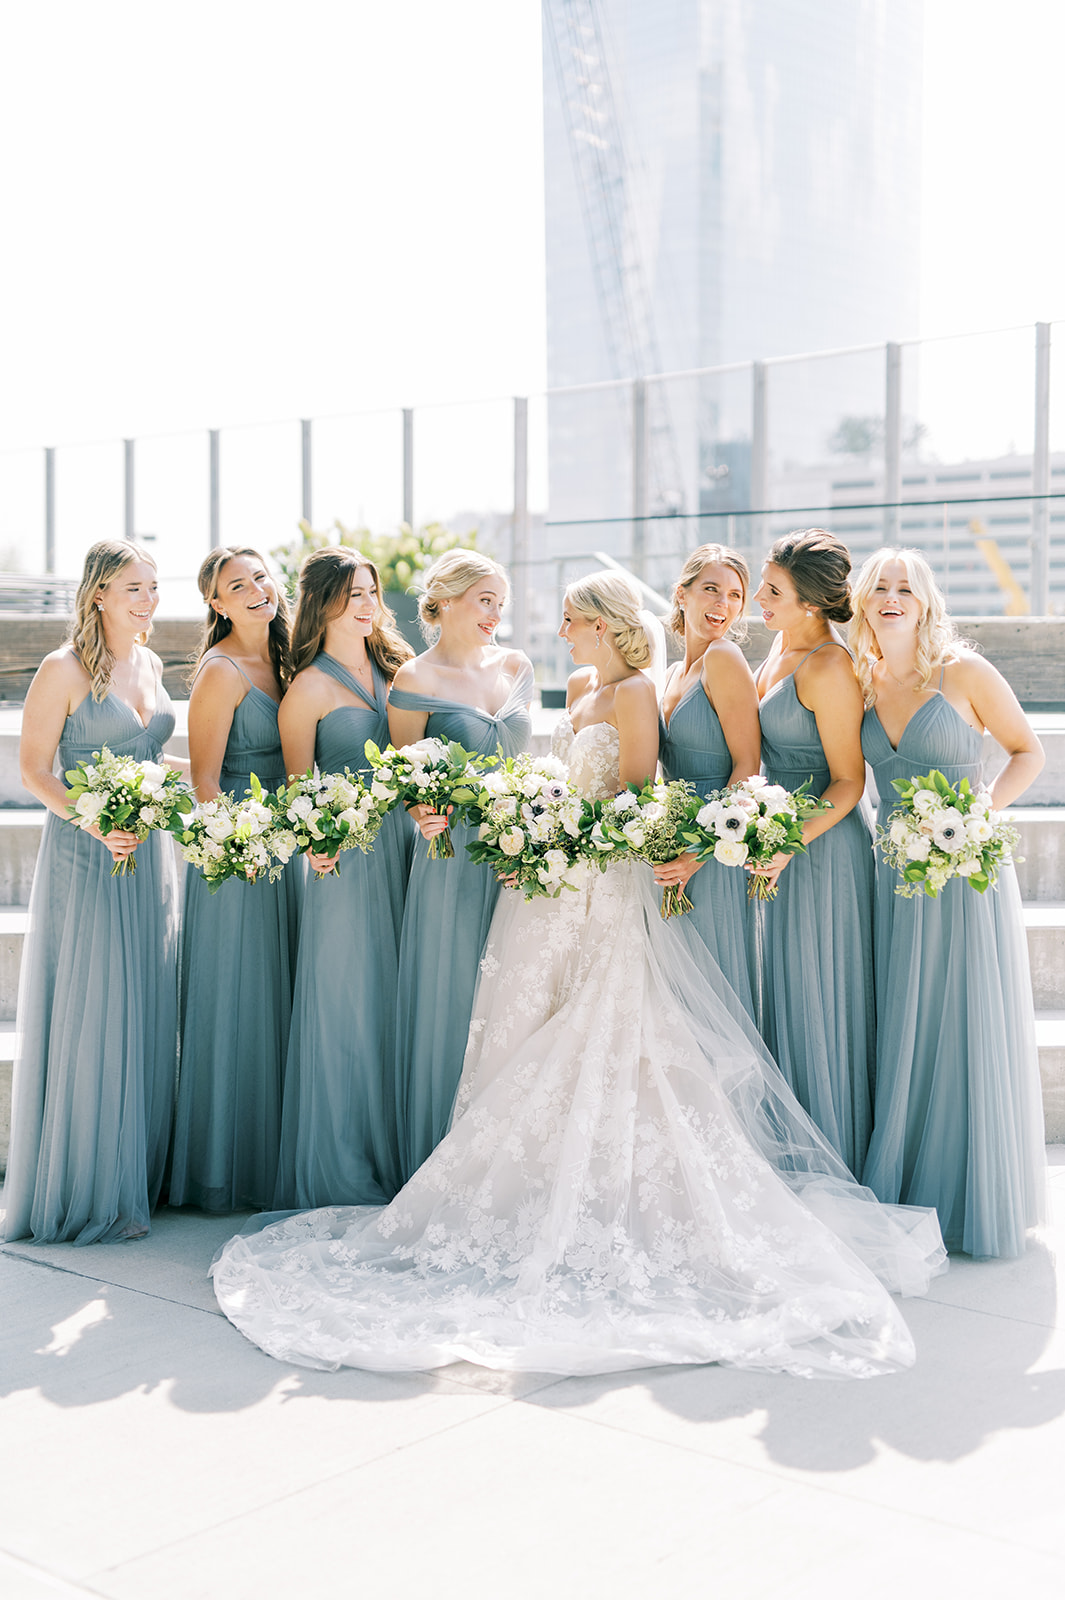 bridesmaids huddle and laugh in pale blue dresses for Secret Urban Garden Wedding at Philadelphia’s Fitler Club